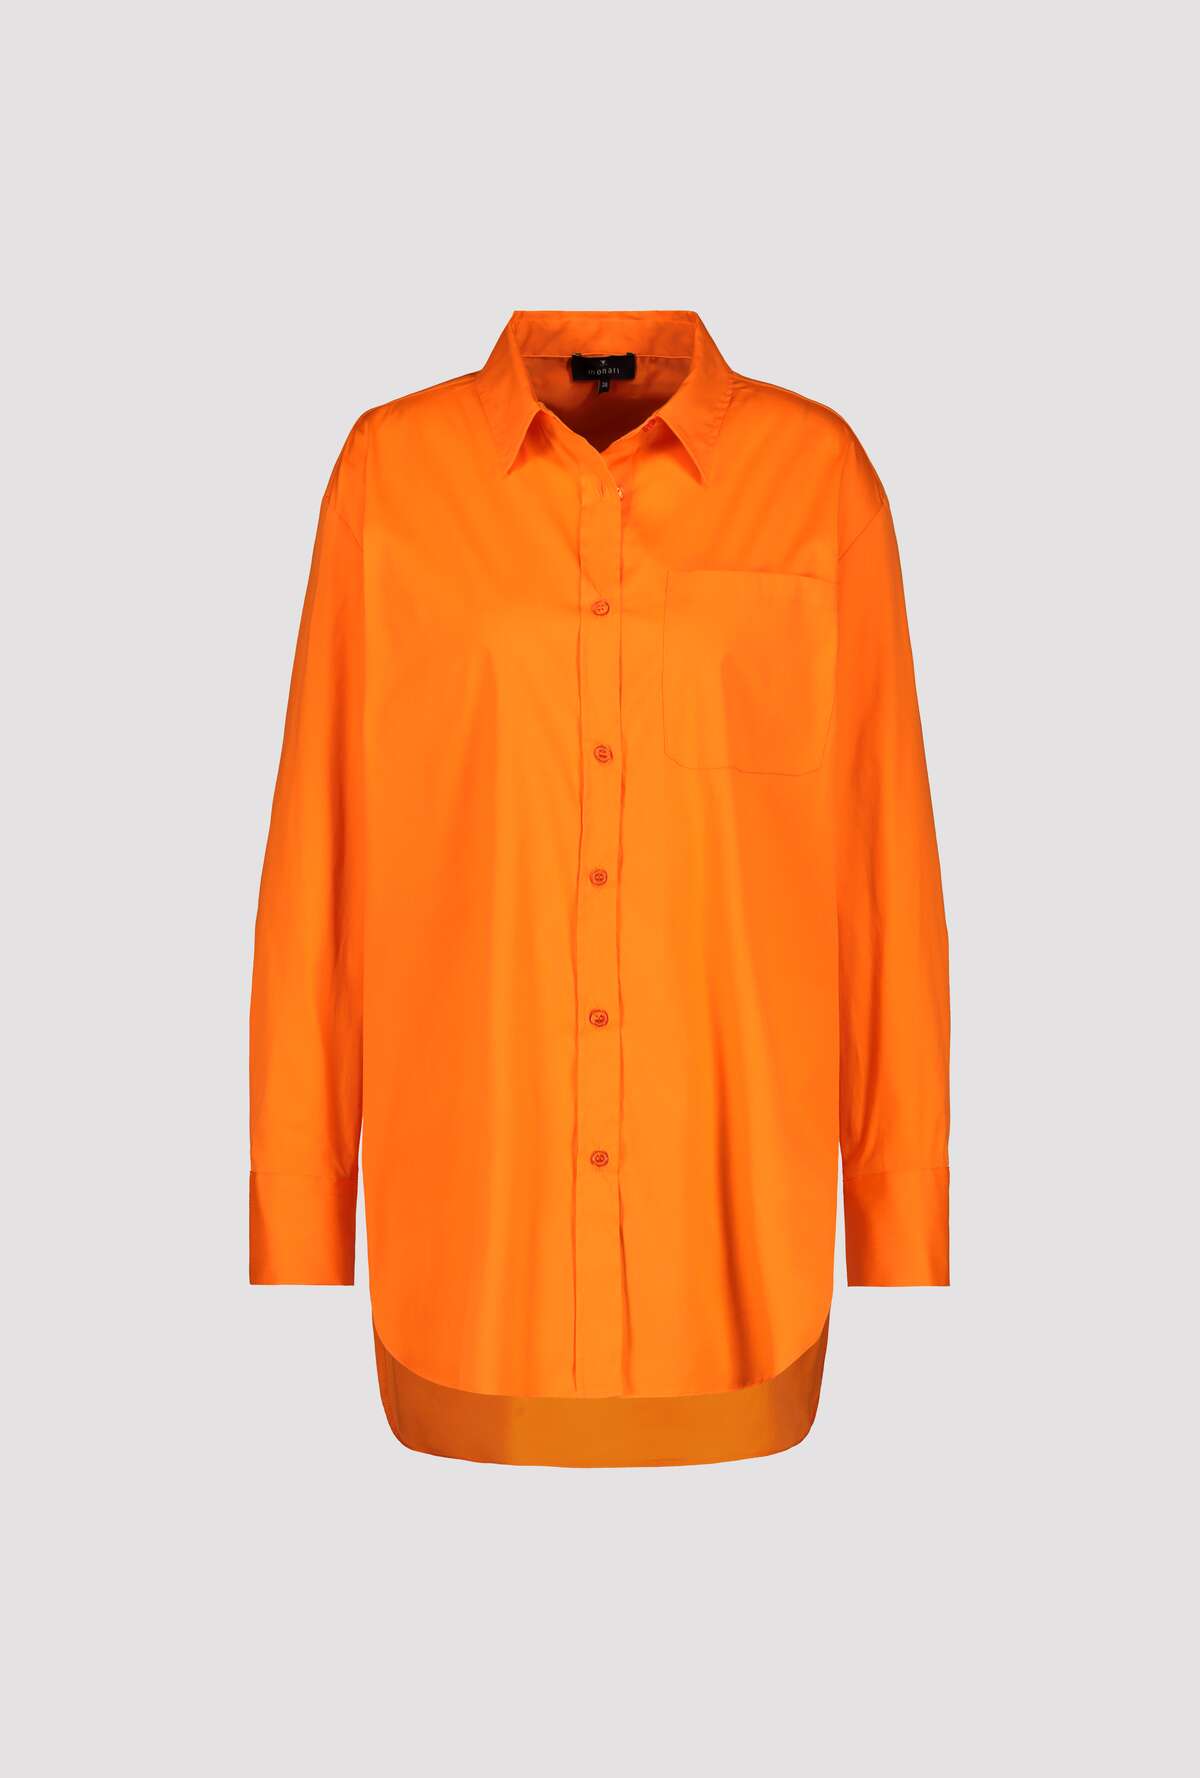 Clementine Shirt / Blouse